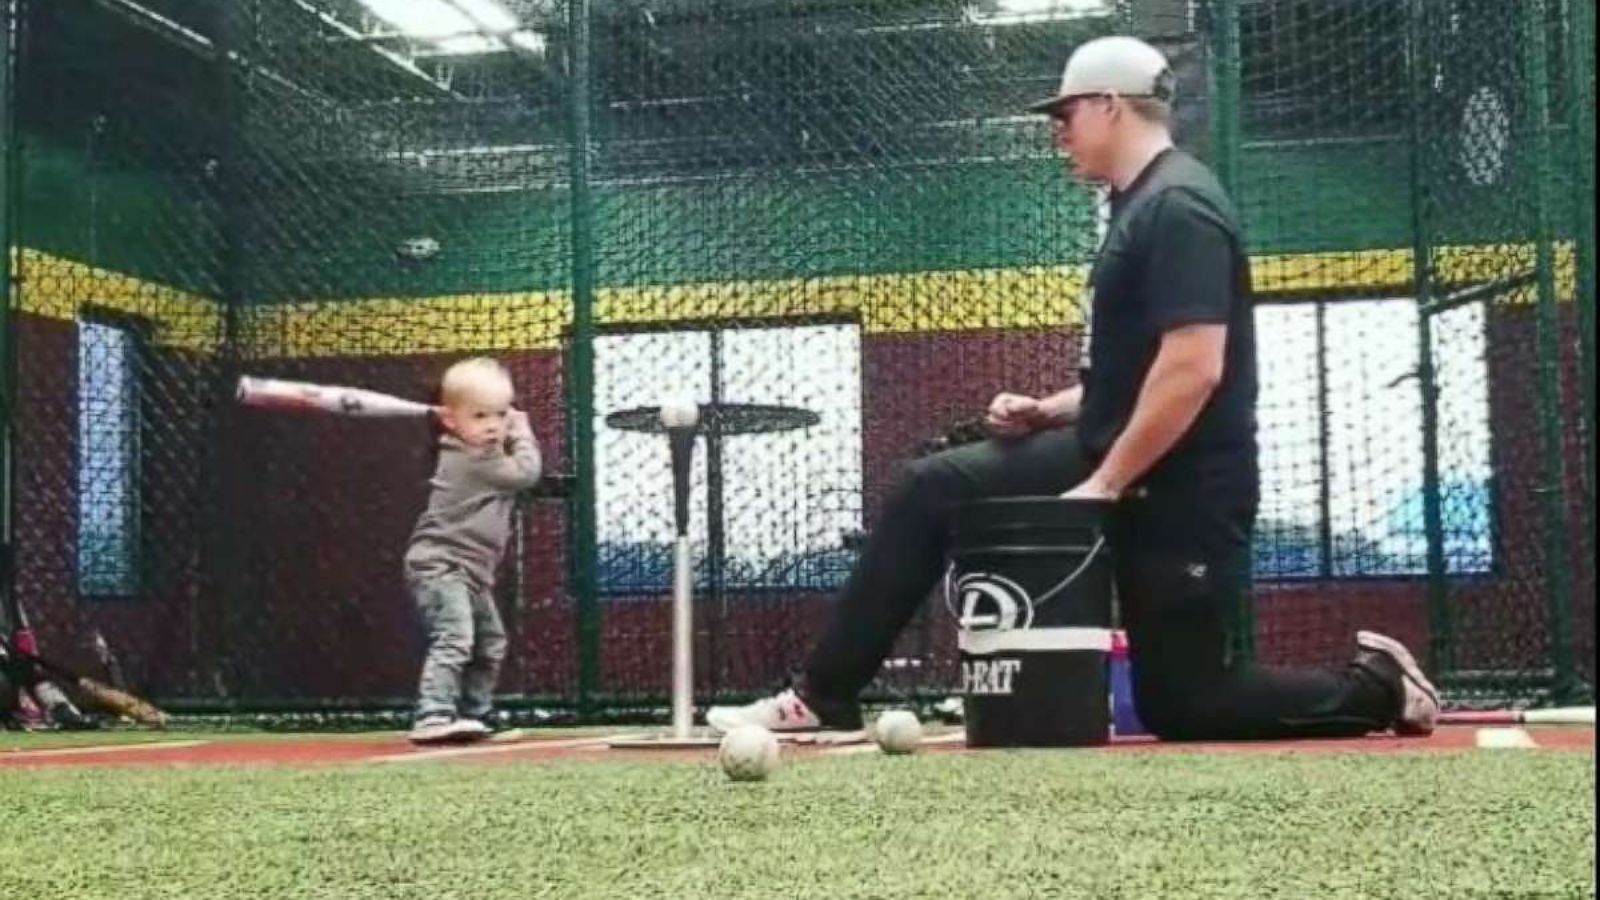 toddler baseball player